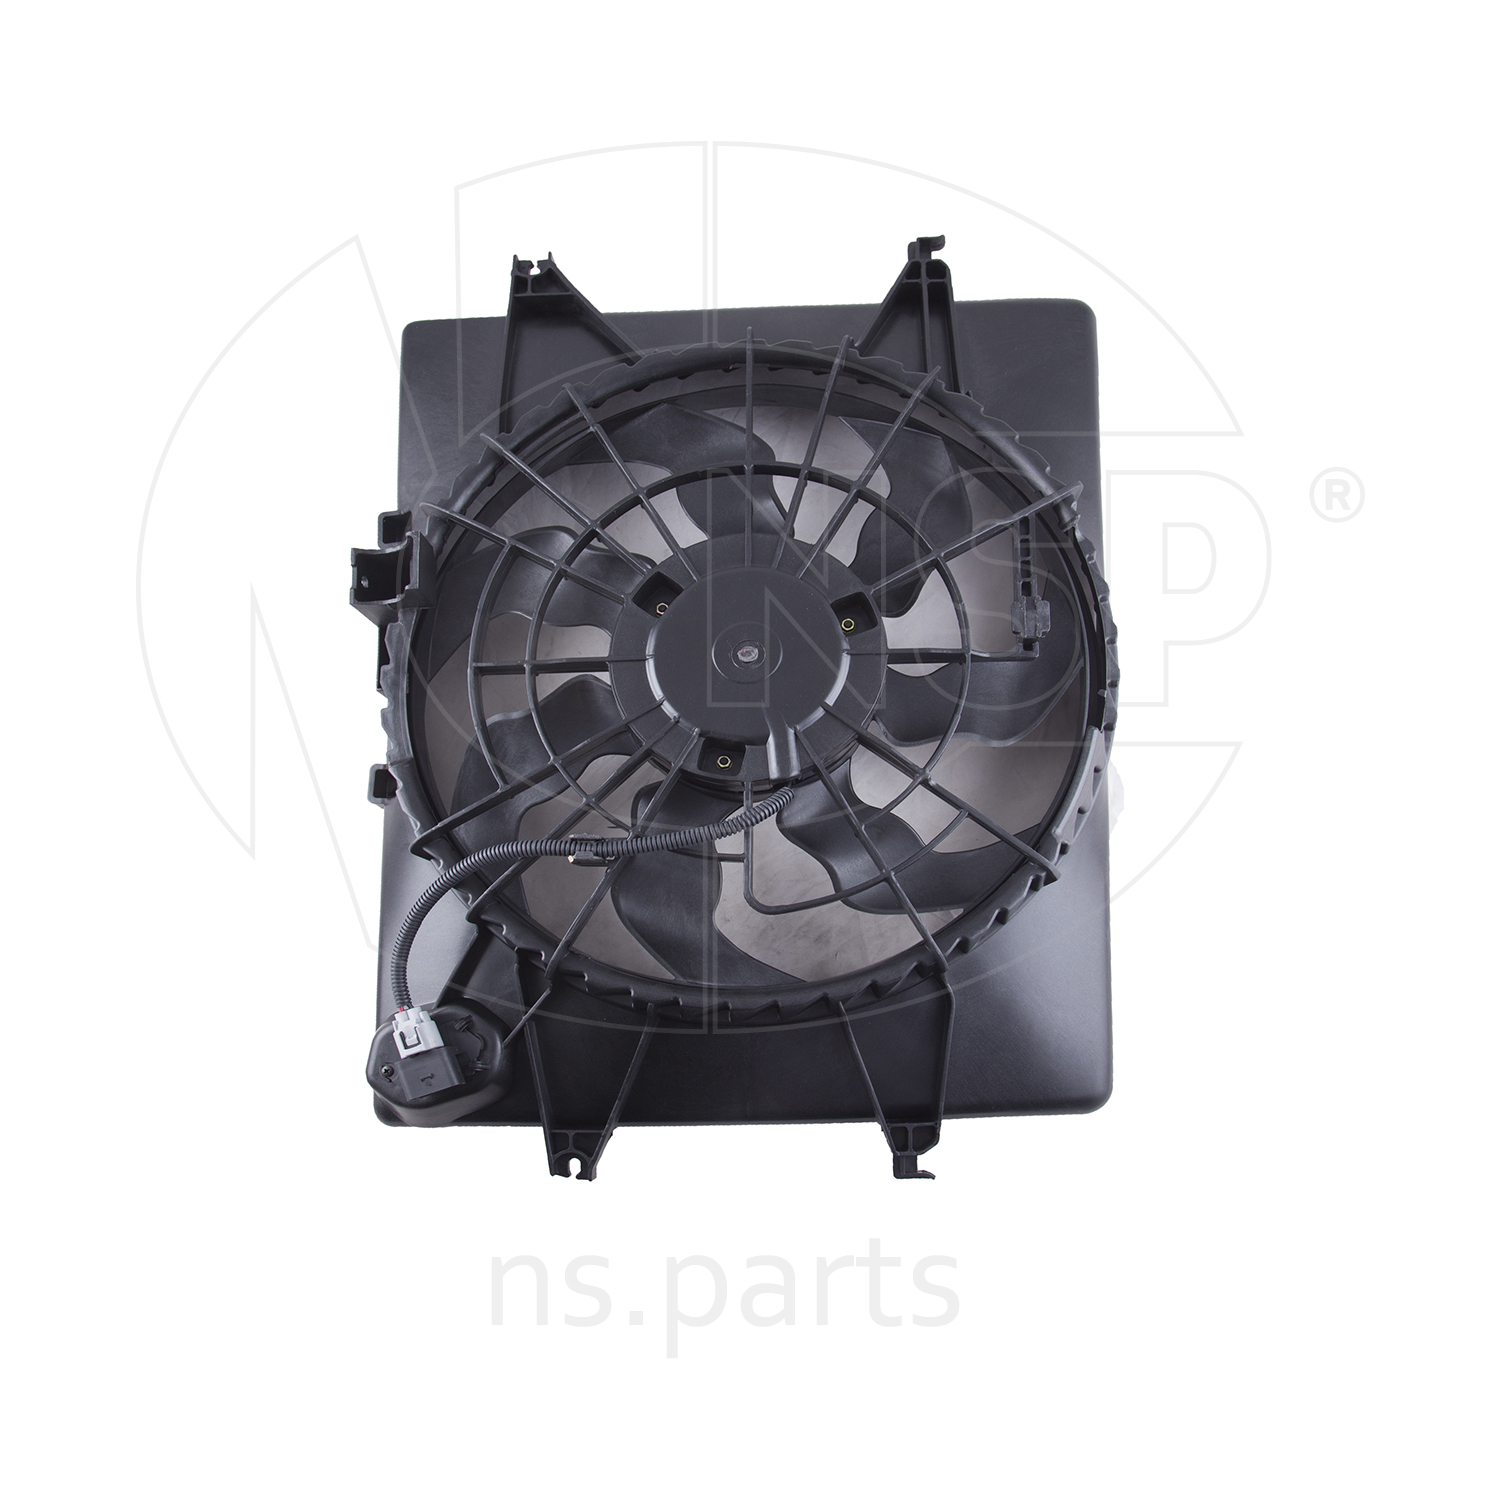 Вентилятор охлаждения двигателя KIA Optima III (2.0) (в сборе) - NSP NSP02253803R170